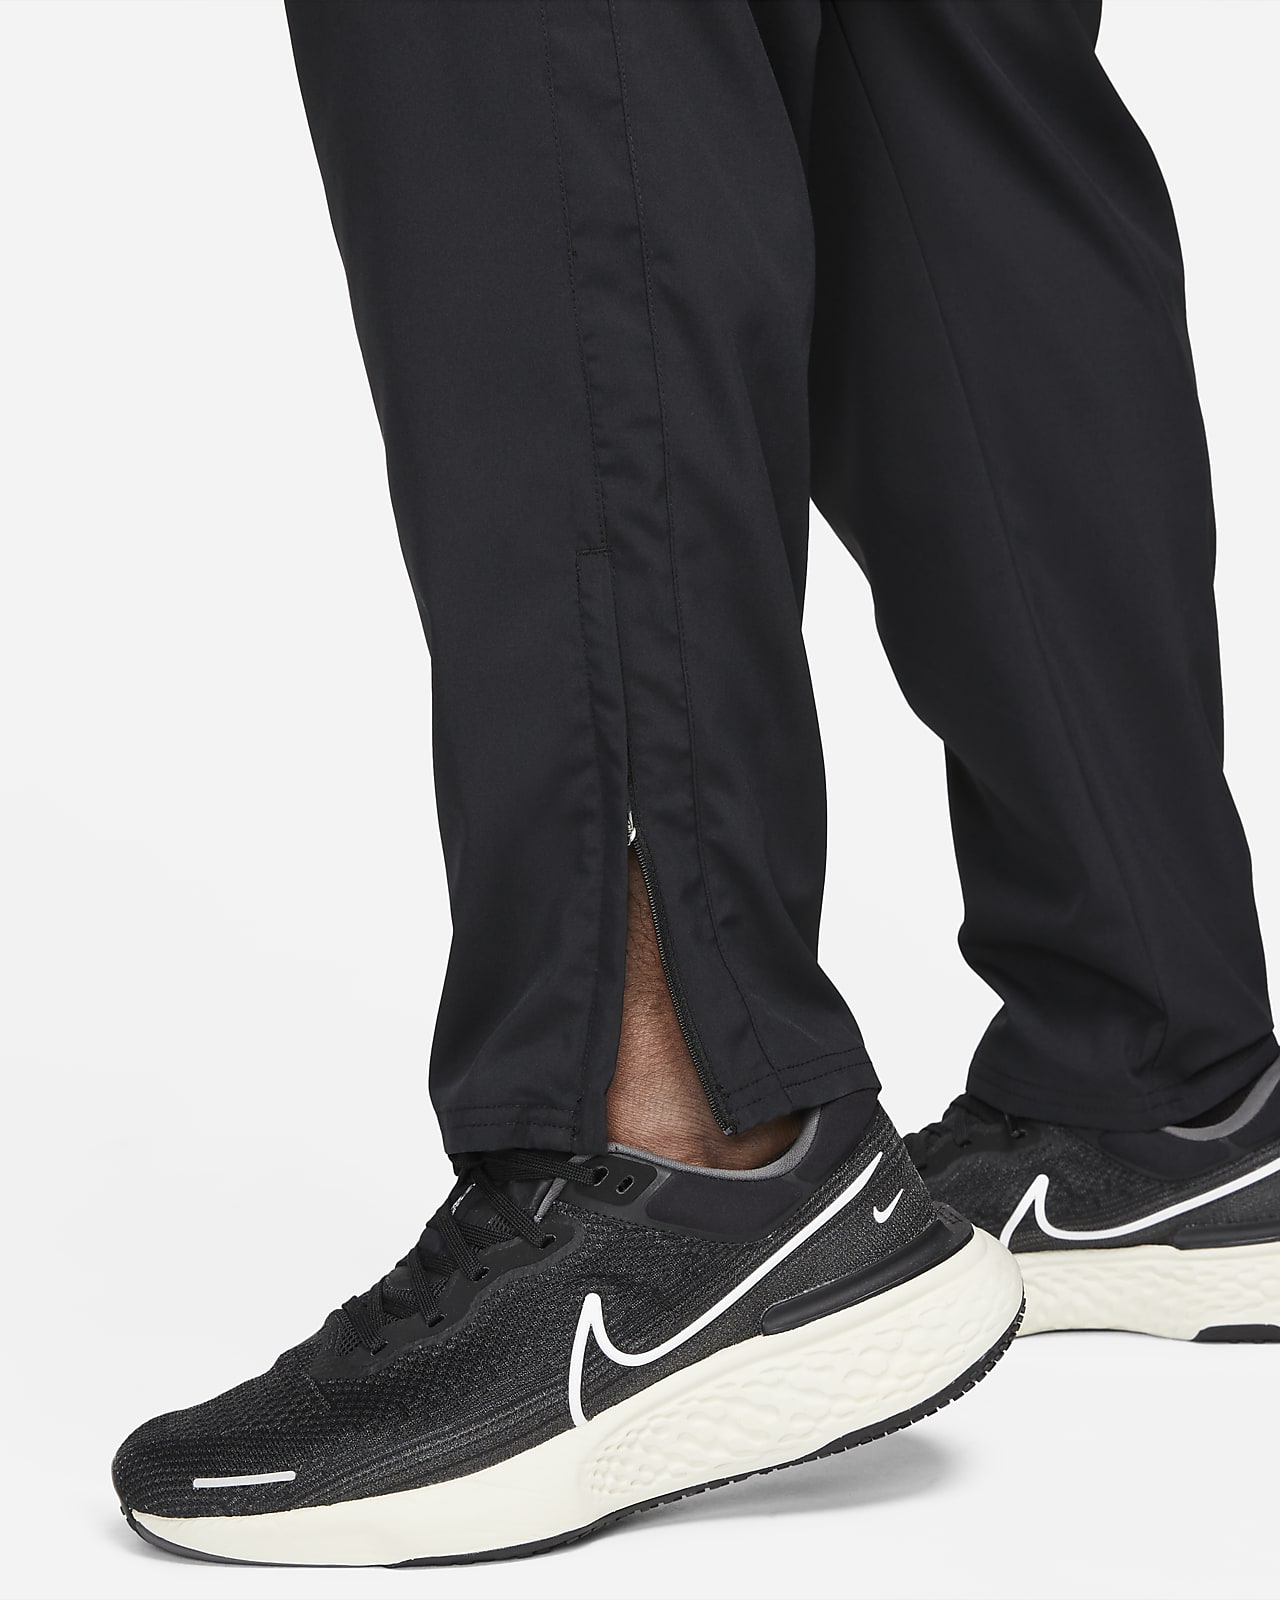 Nike Mens DriFit Woven Training Pants XLarge Tall Dark GreyBlack   Amazonin Fashion